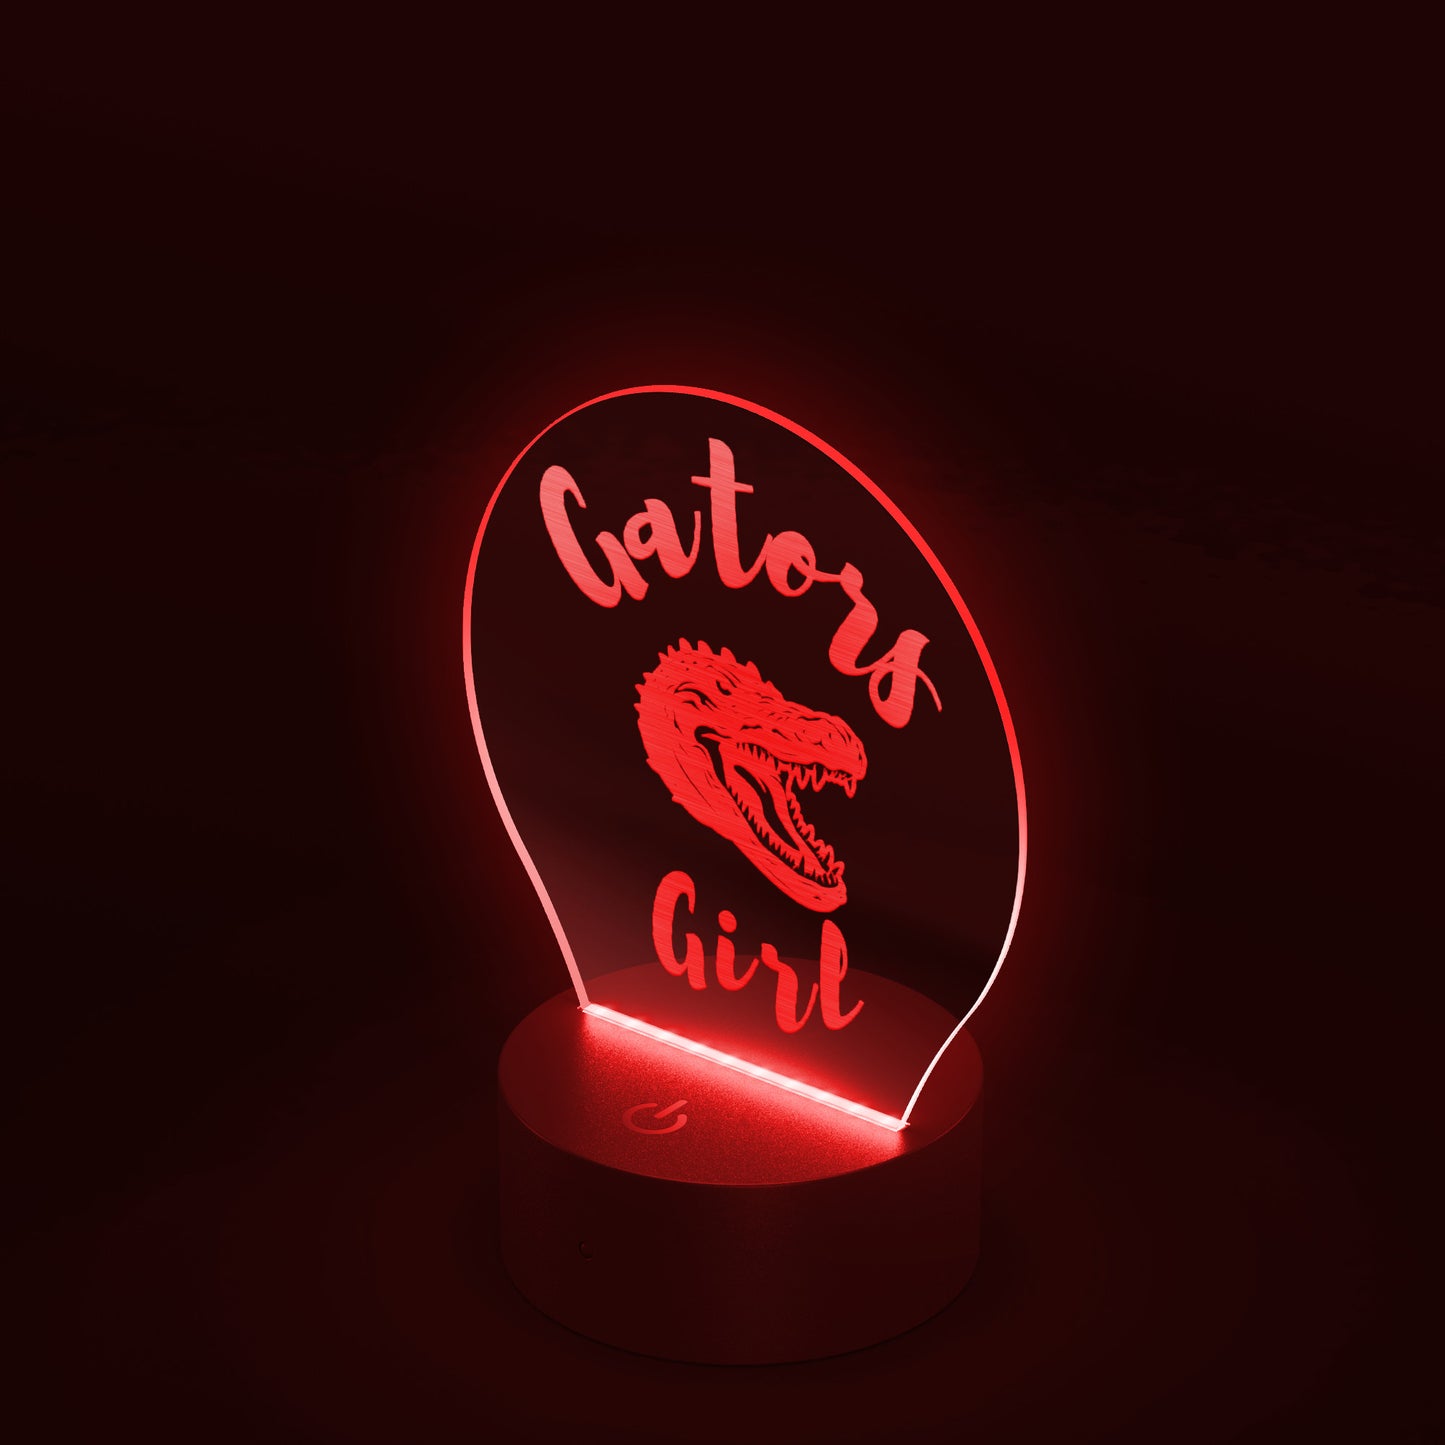 Gators Girl University Acrylic LED Table Light